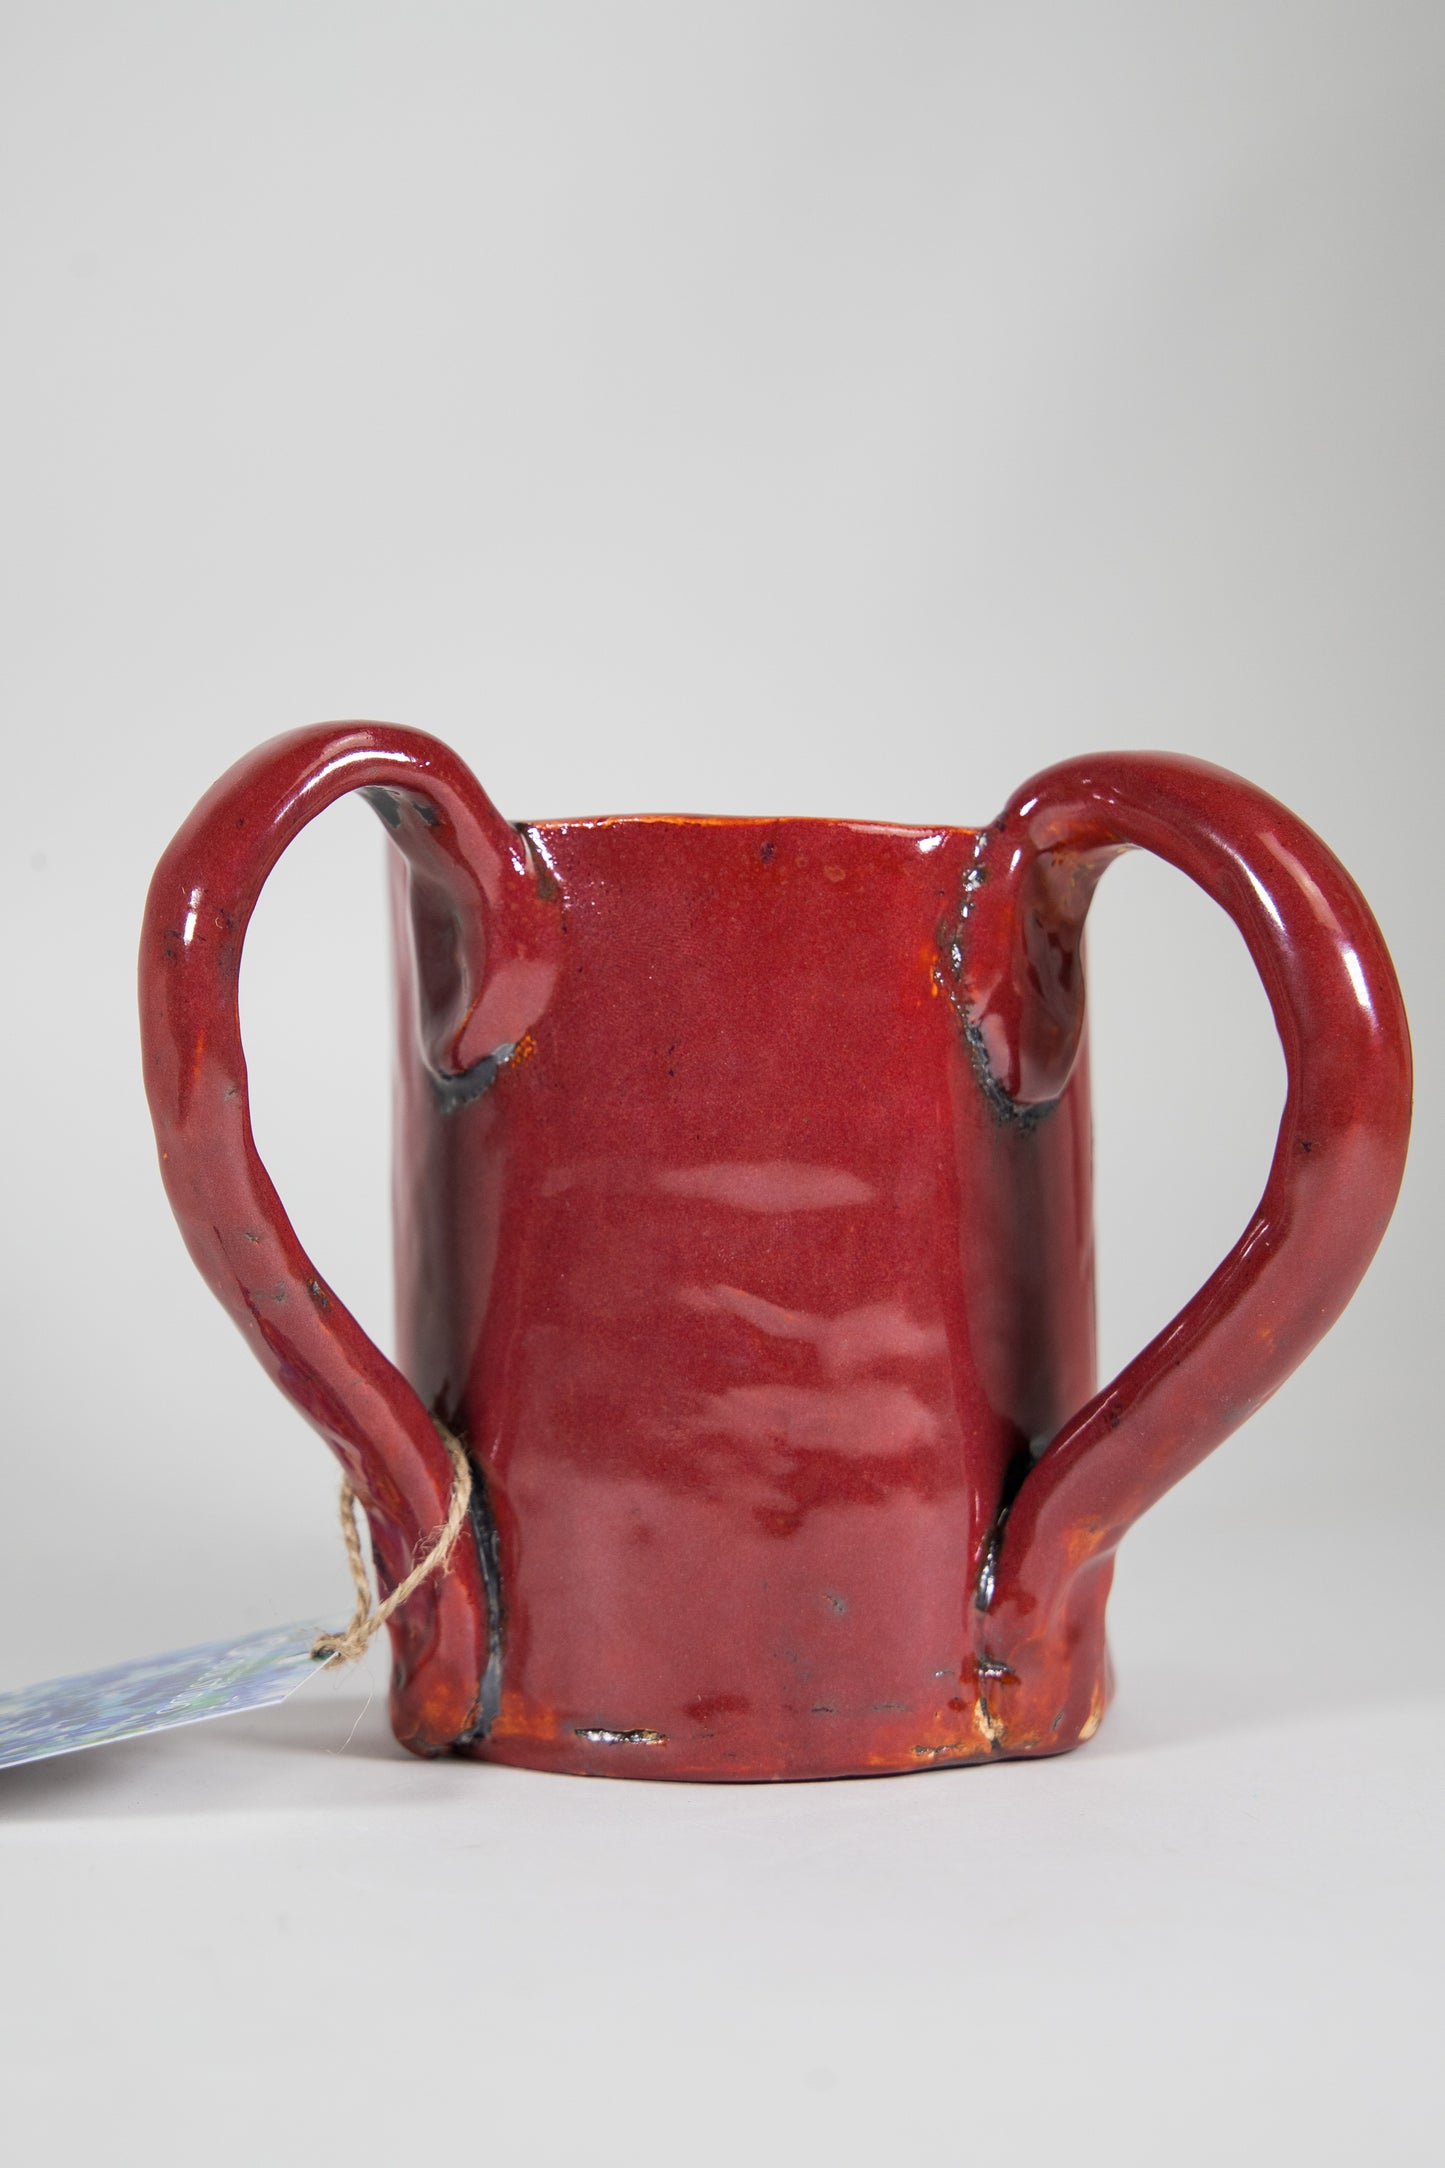 Red Ceramic Washing Cup